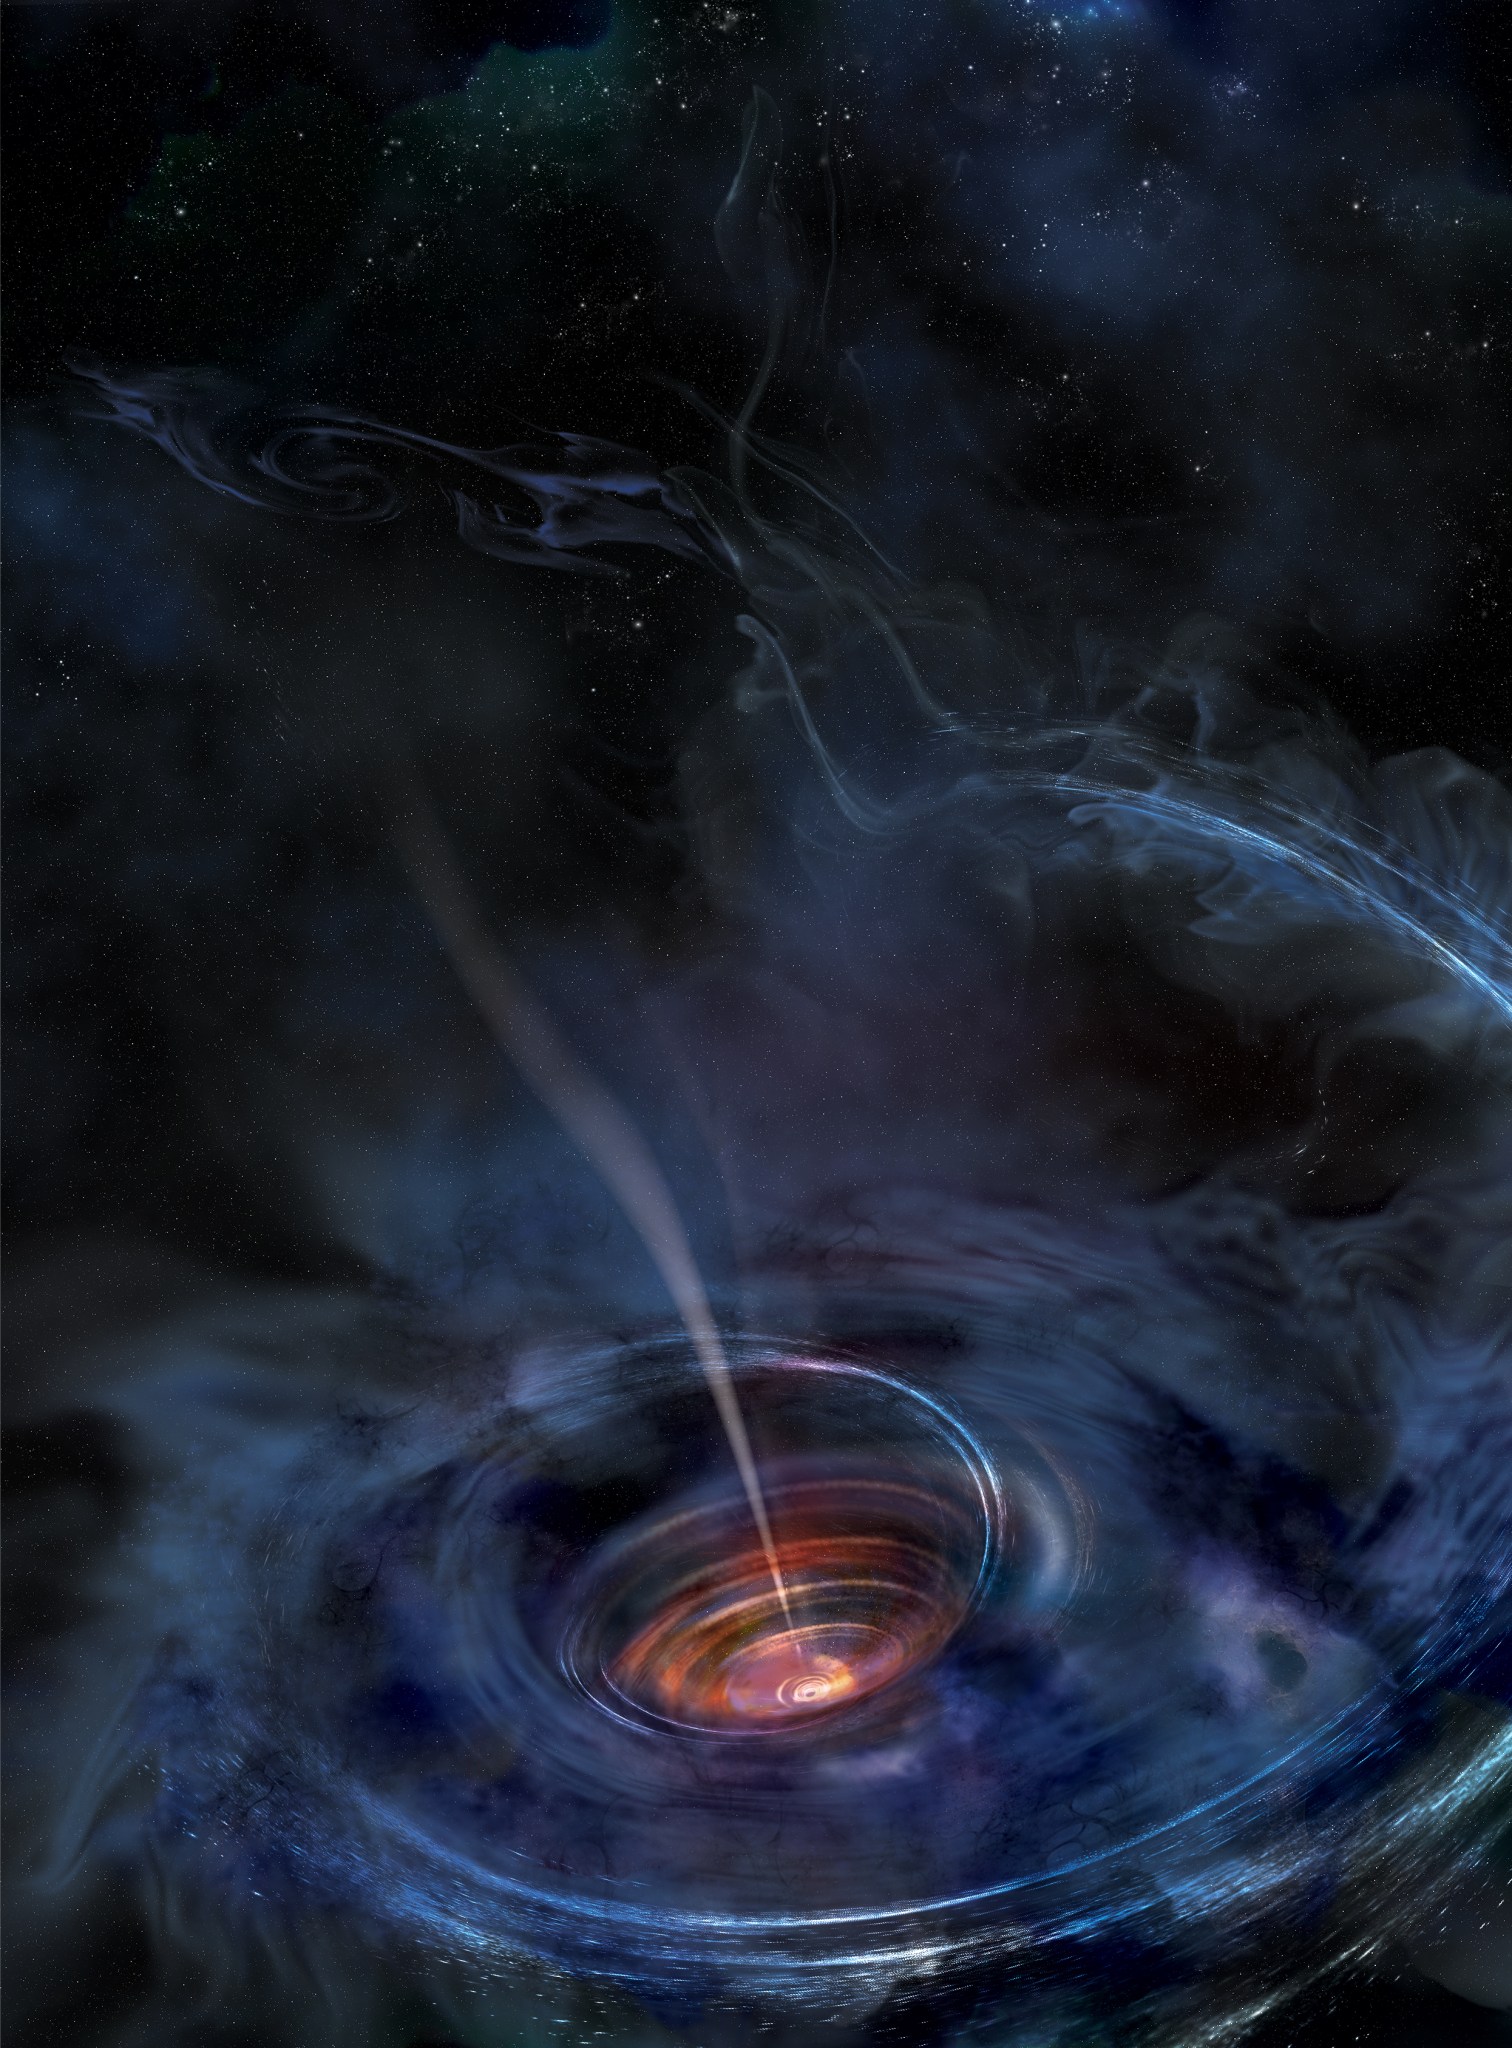 Thick accretion disk around supermassive black hole, stellar debris falling toward black hole, X-ray light burst near center